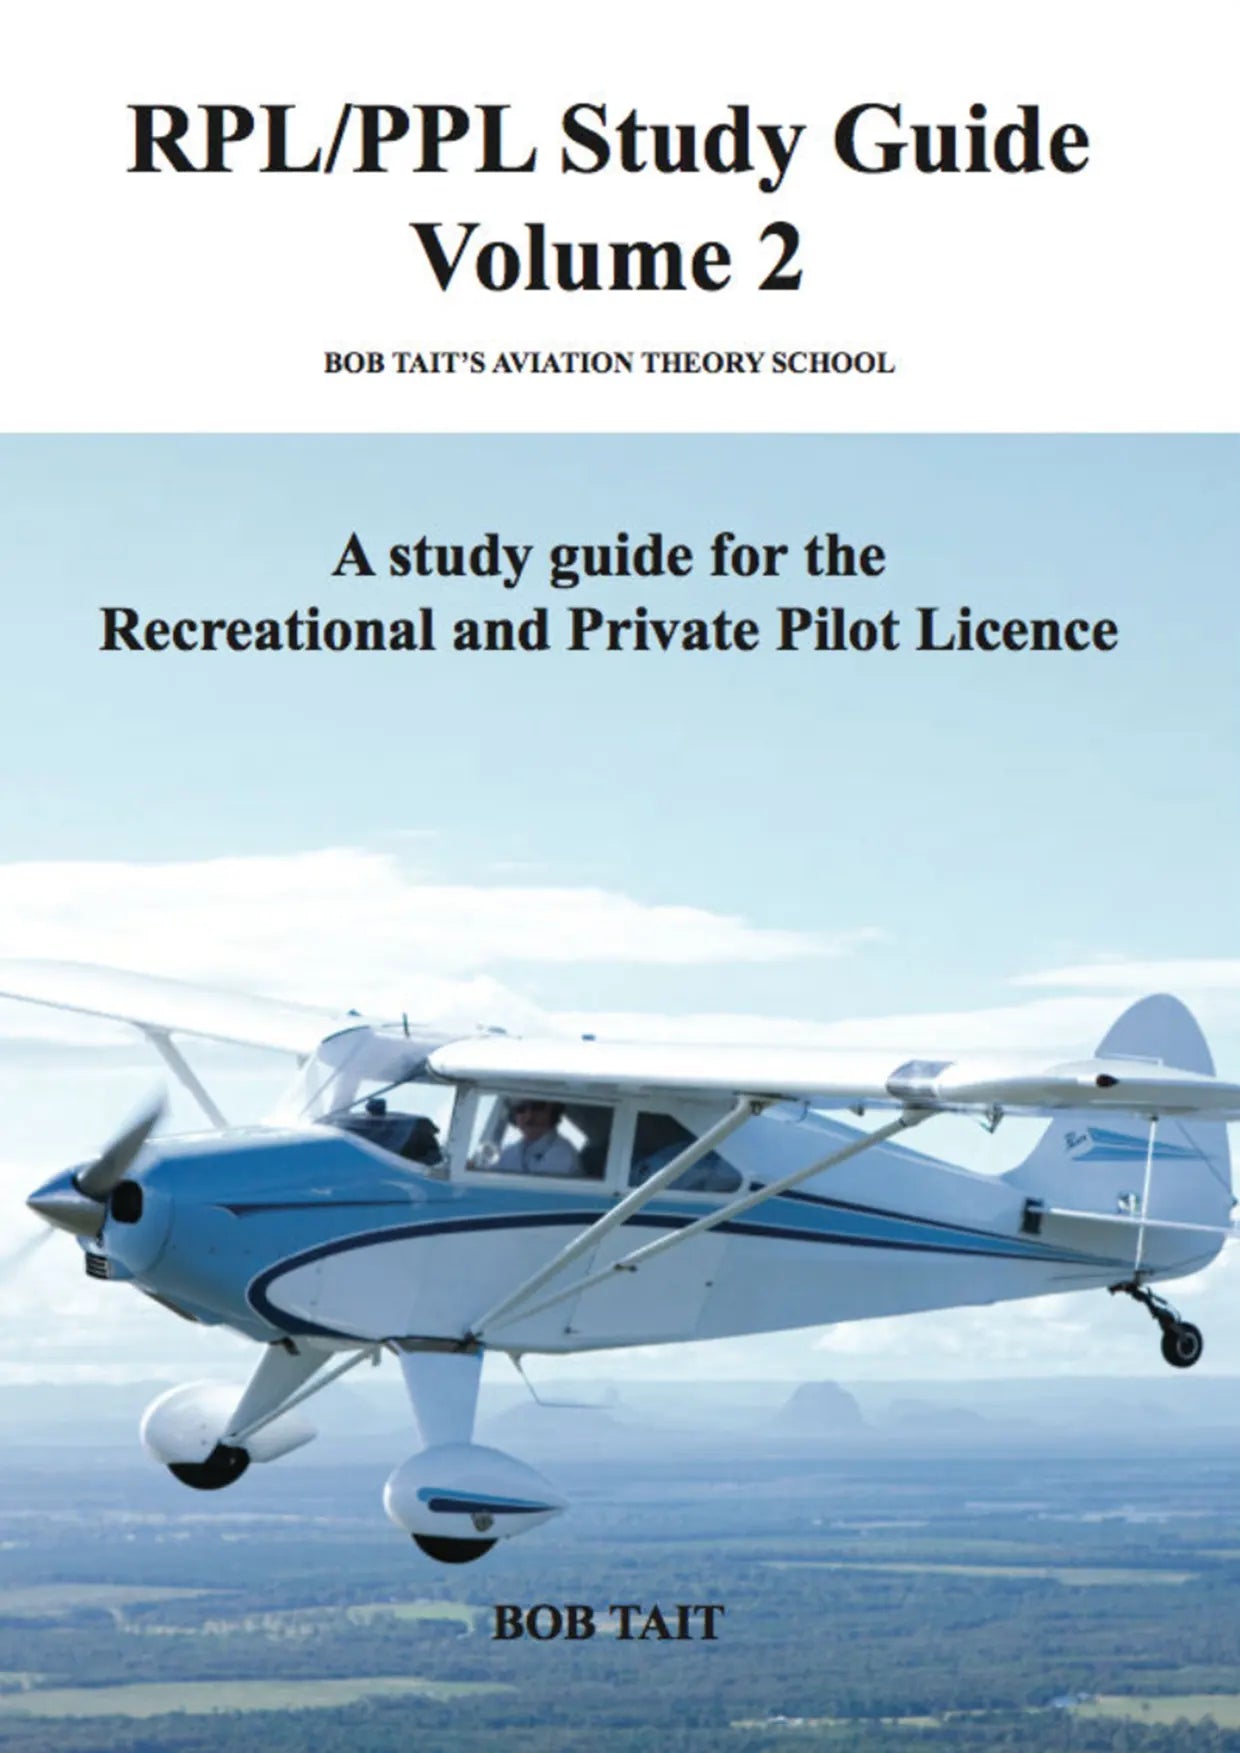 Bob Tait RPL/PPL Study Guide Volume 1